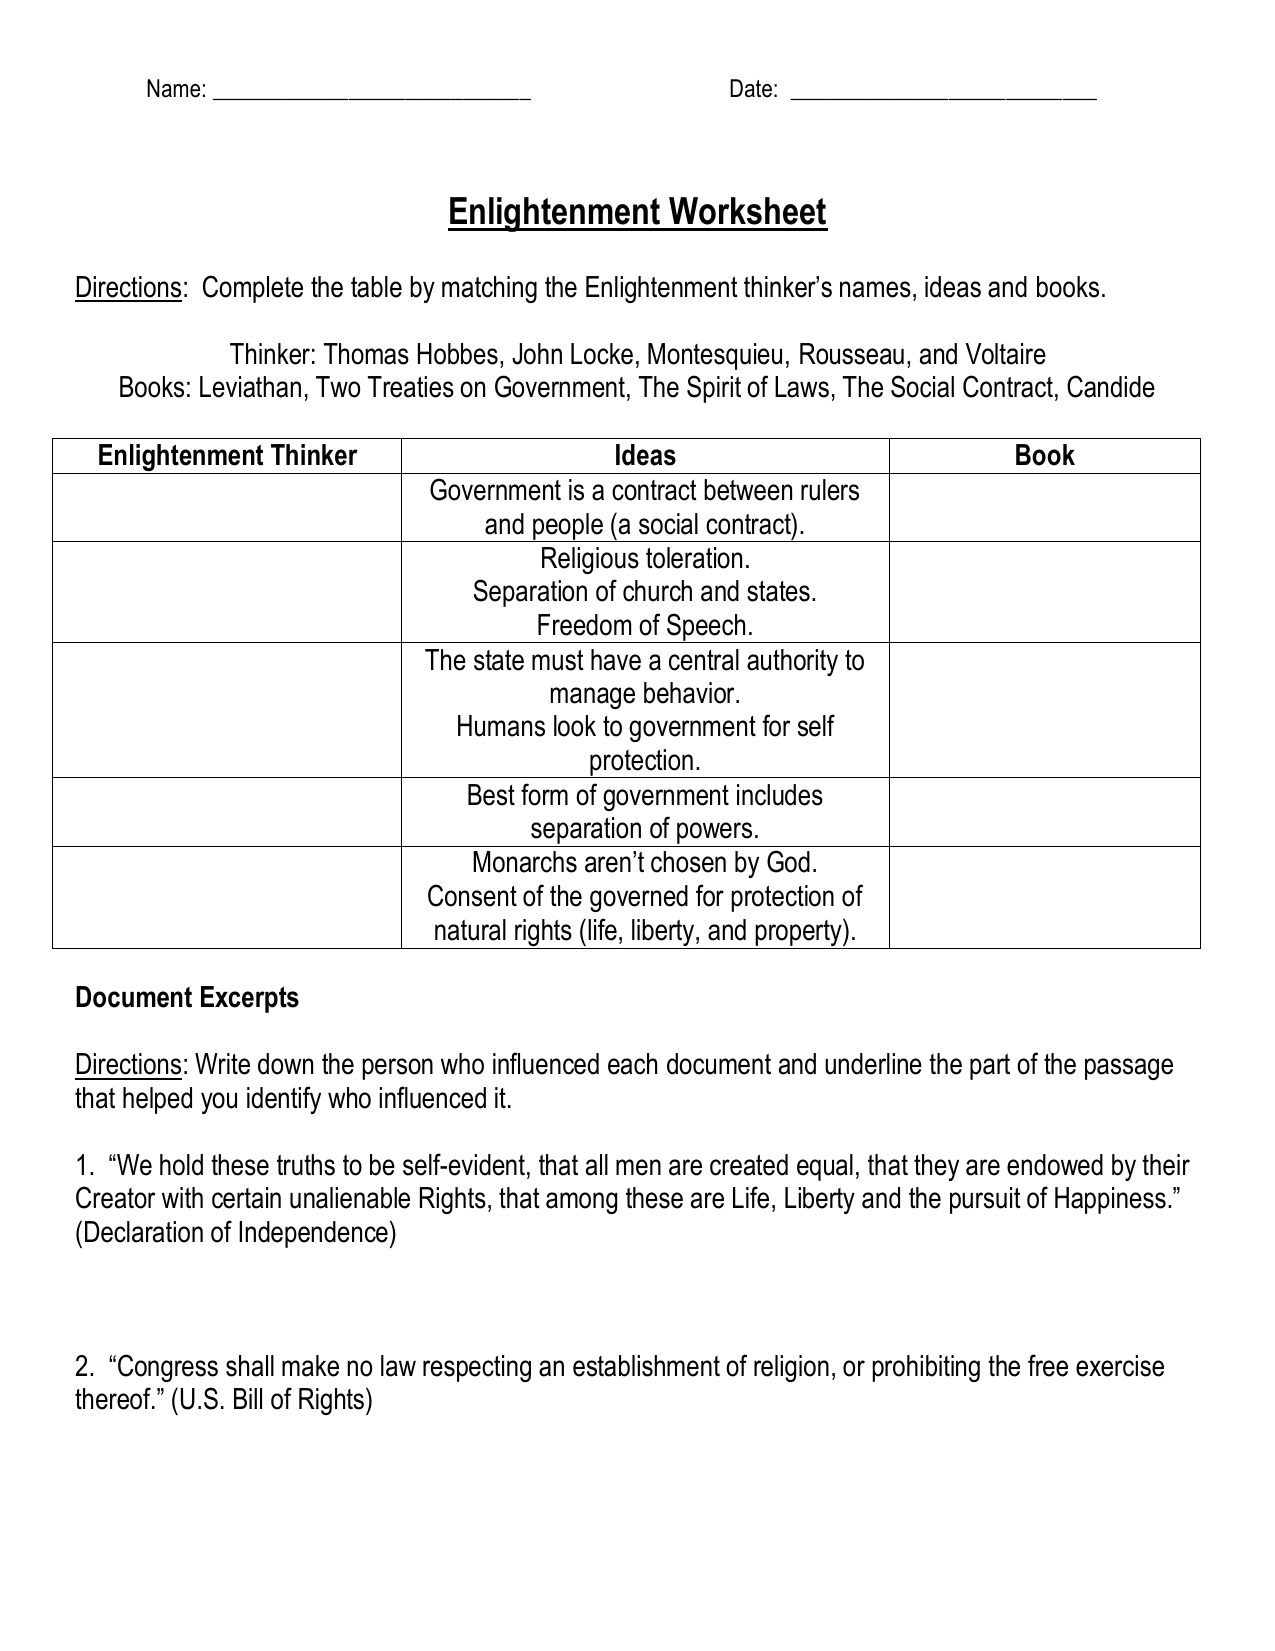 enlightenment-worksheet-db-excel